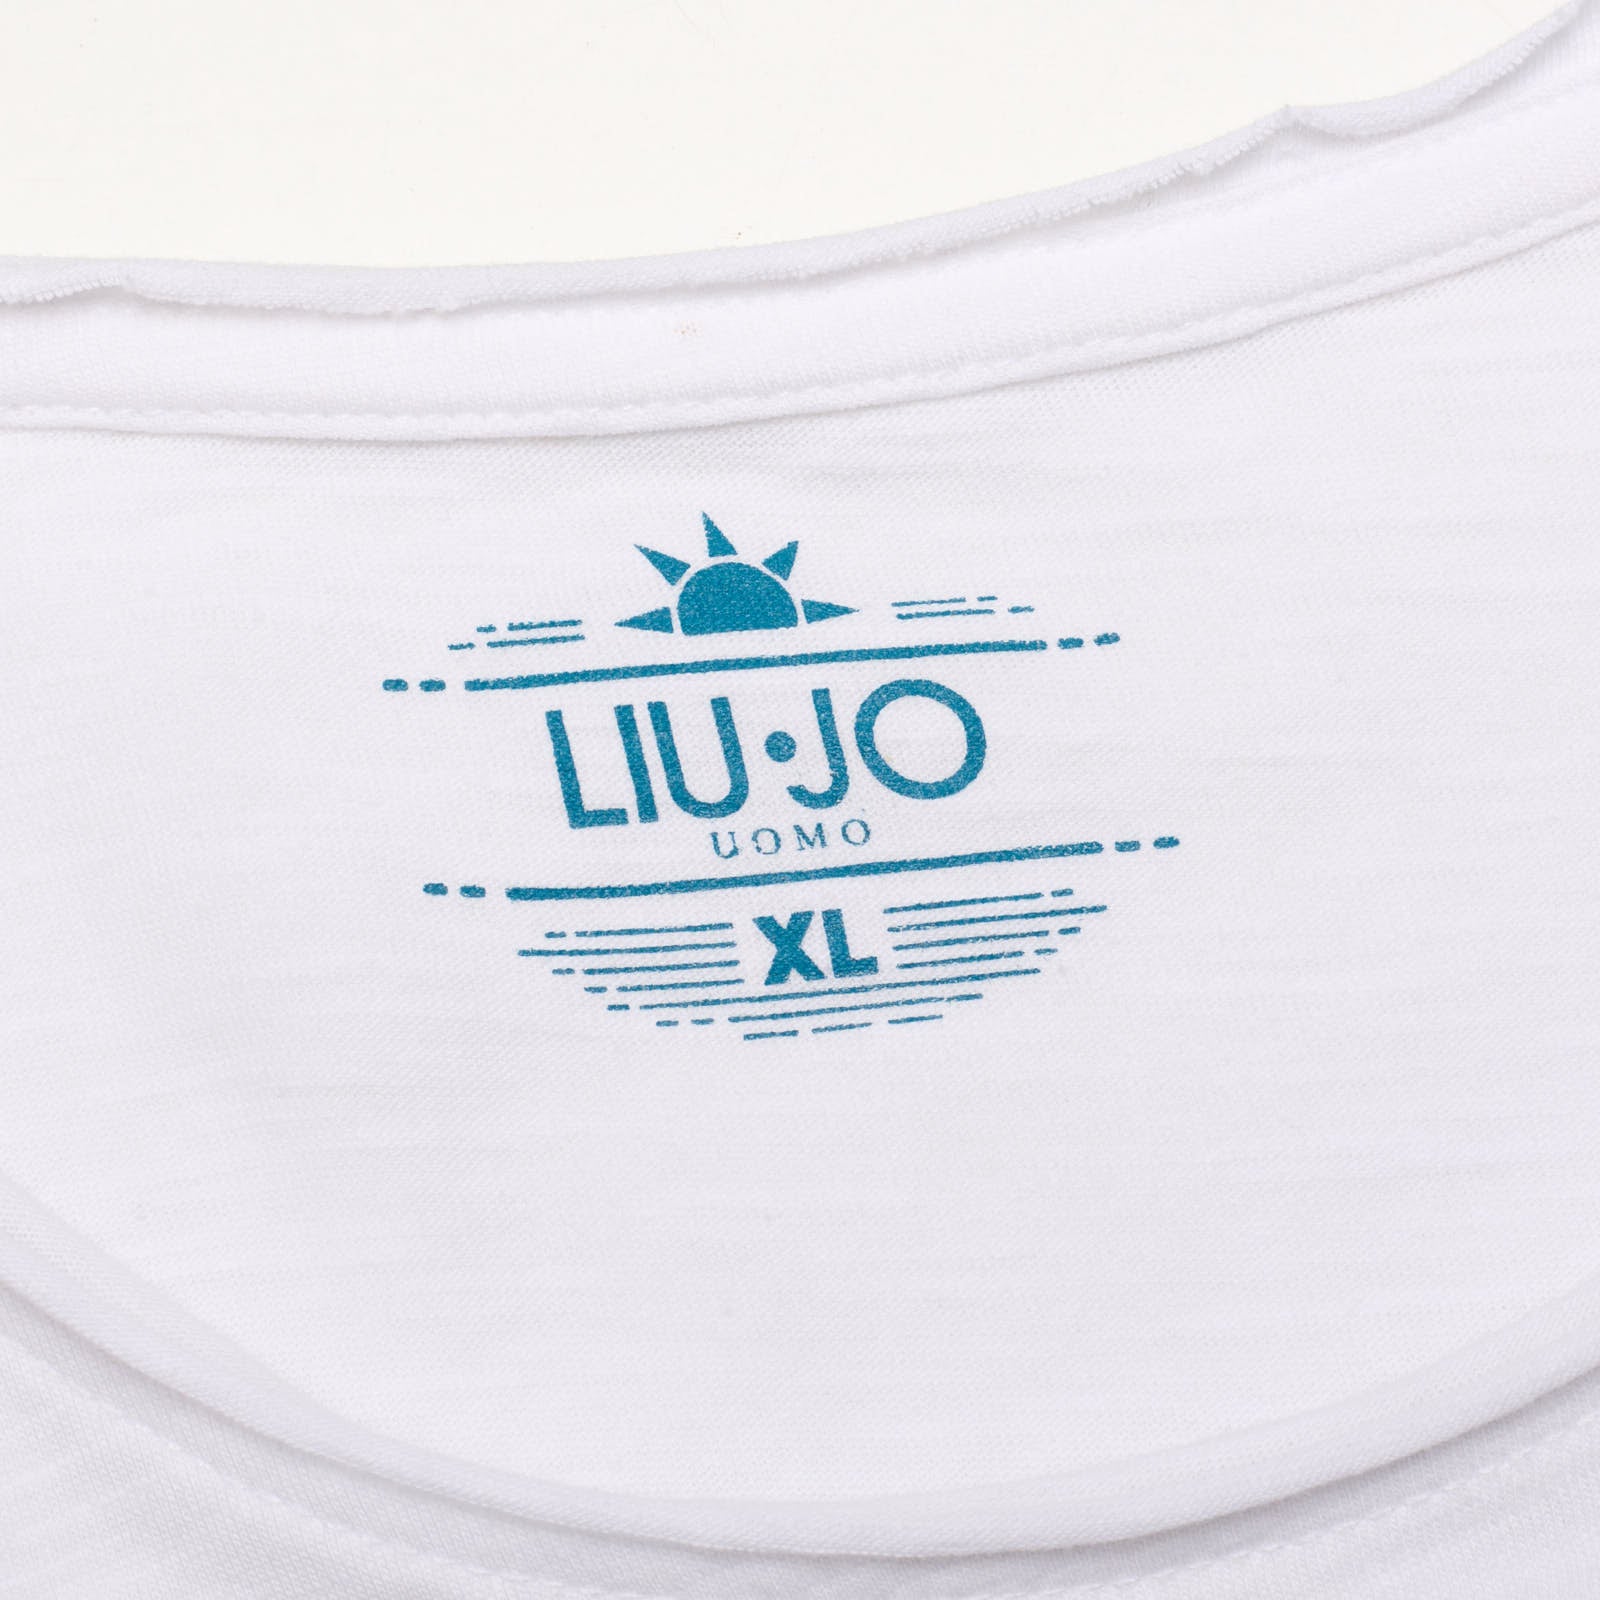 LIU JO Milano White Printed Cotton Crew Neck Short Sleeve T-Shirt NEW